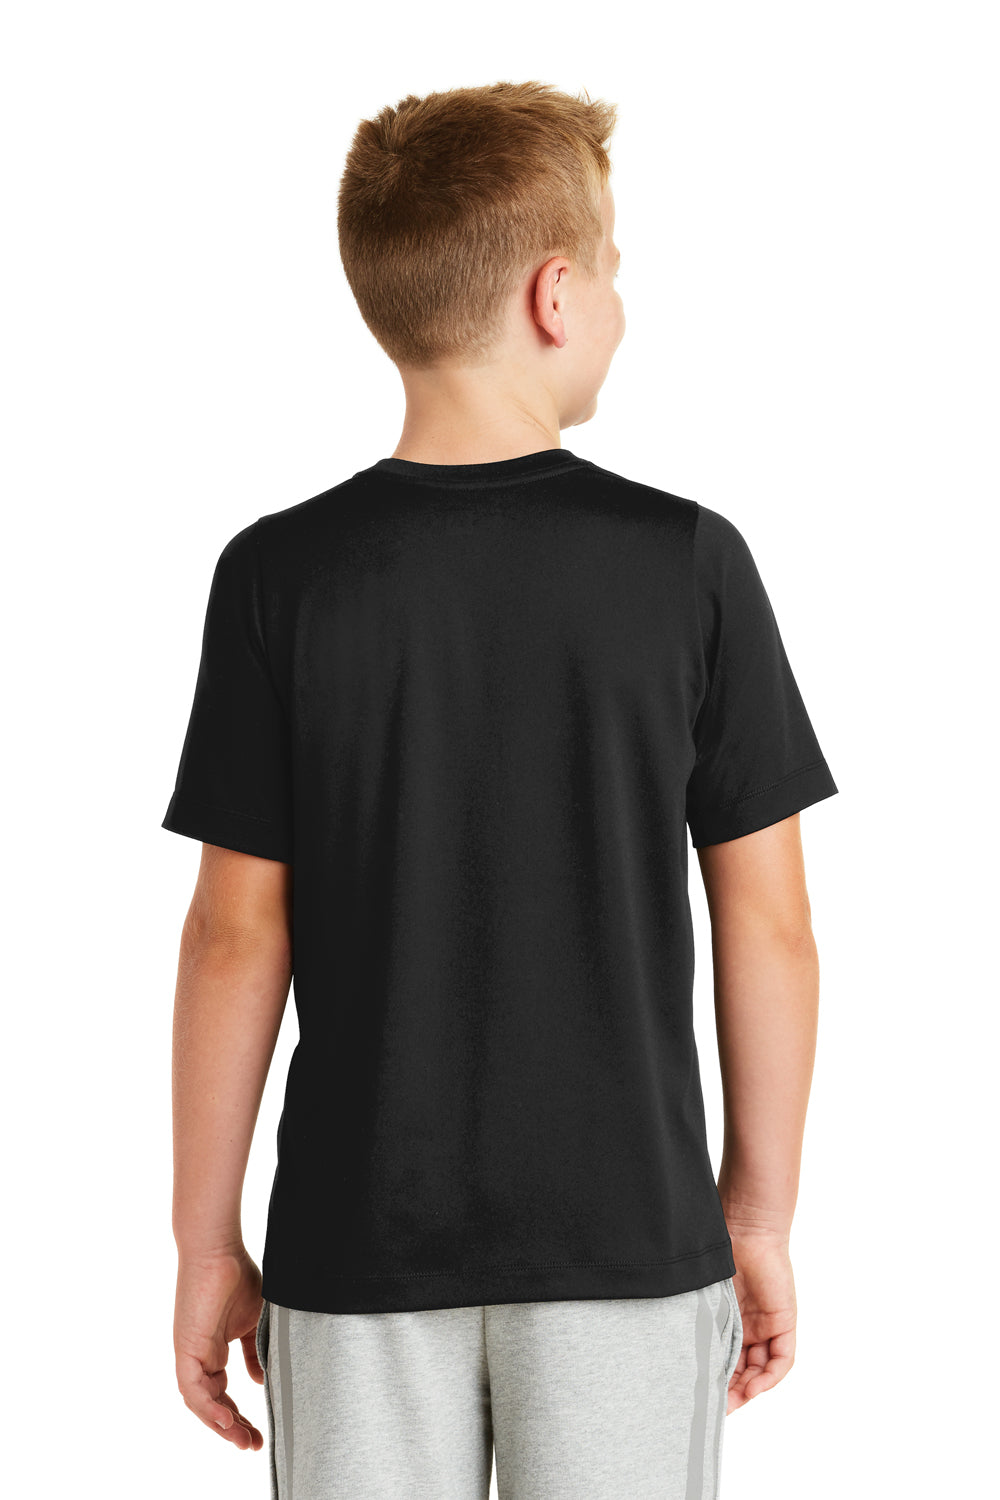 New Era YNEA200 Youth Series Performance Jersey Moisture Wicking Short Sleeve Crewneck T-Shirt Black Back